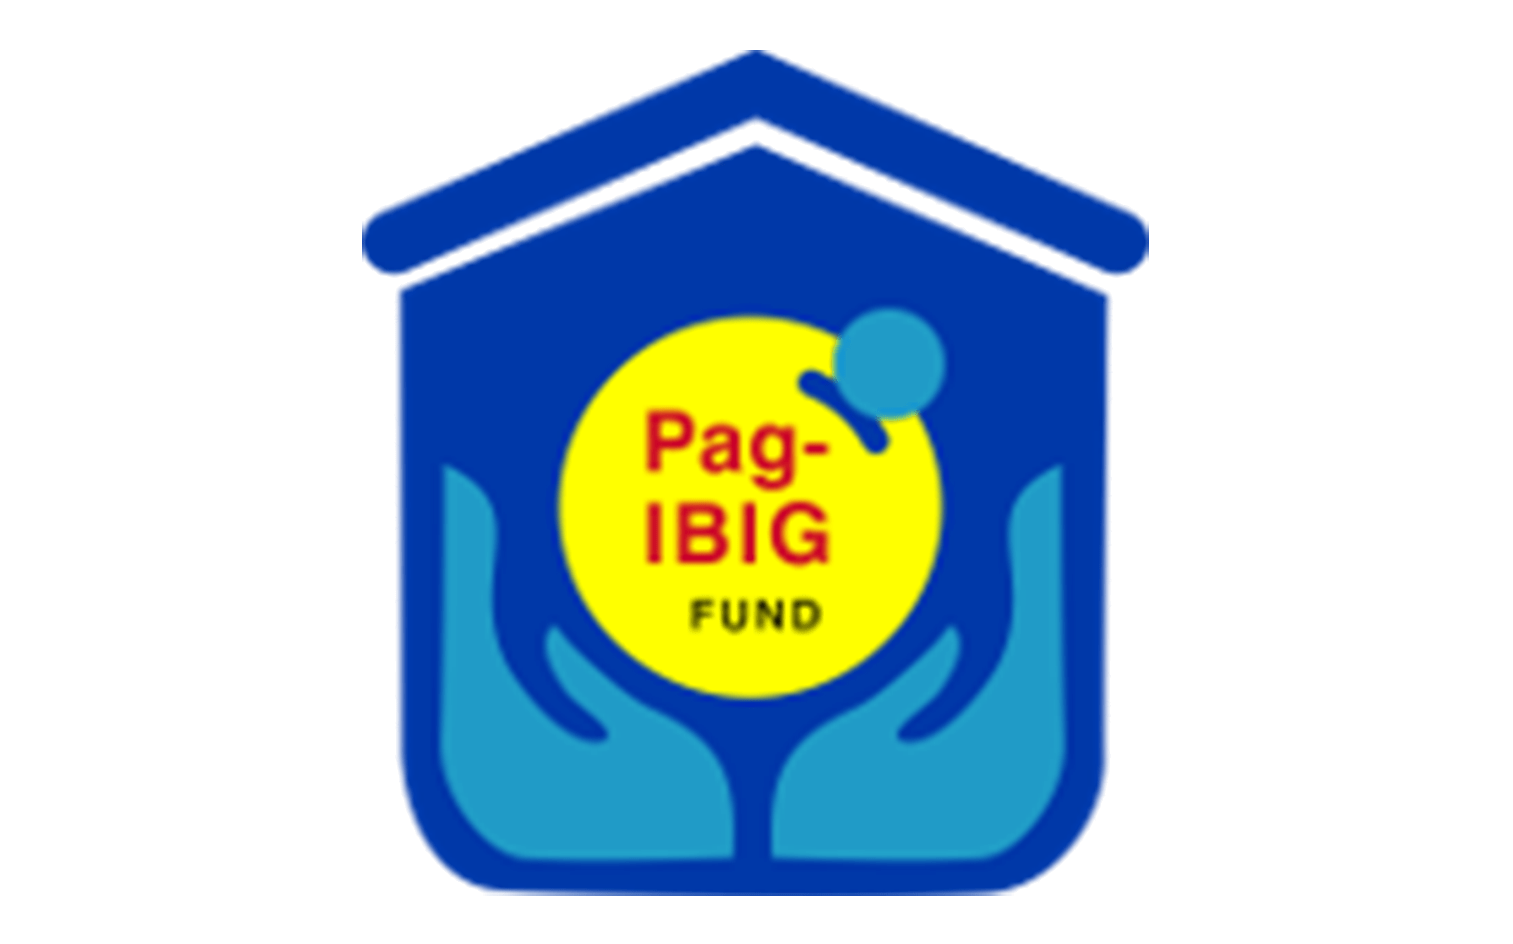 Pag IBIG Fund